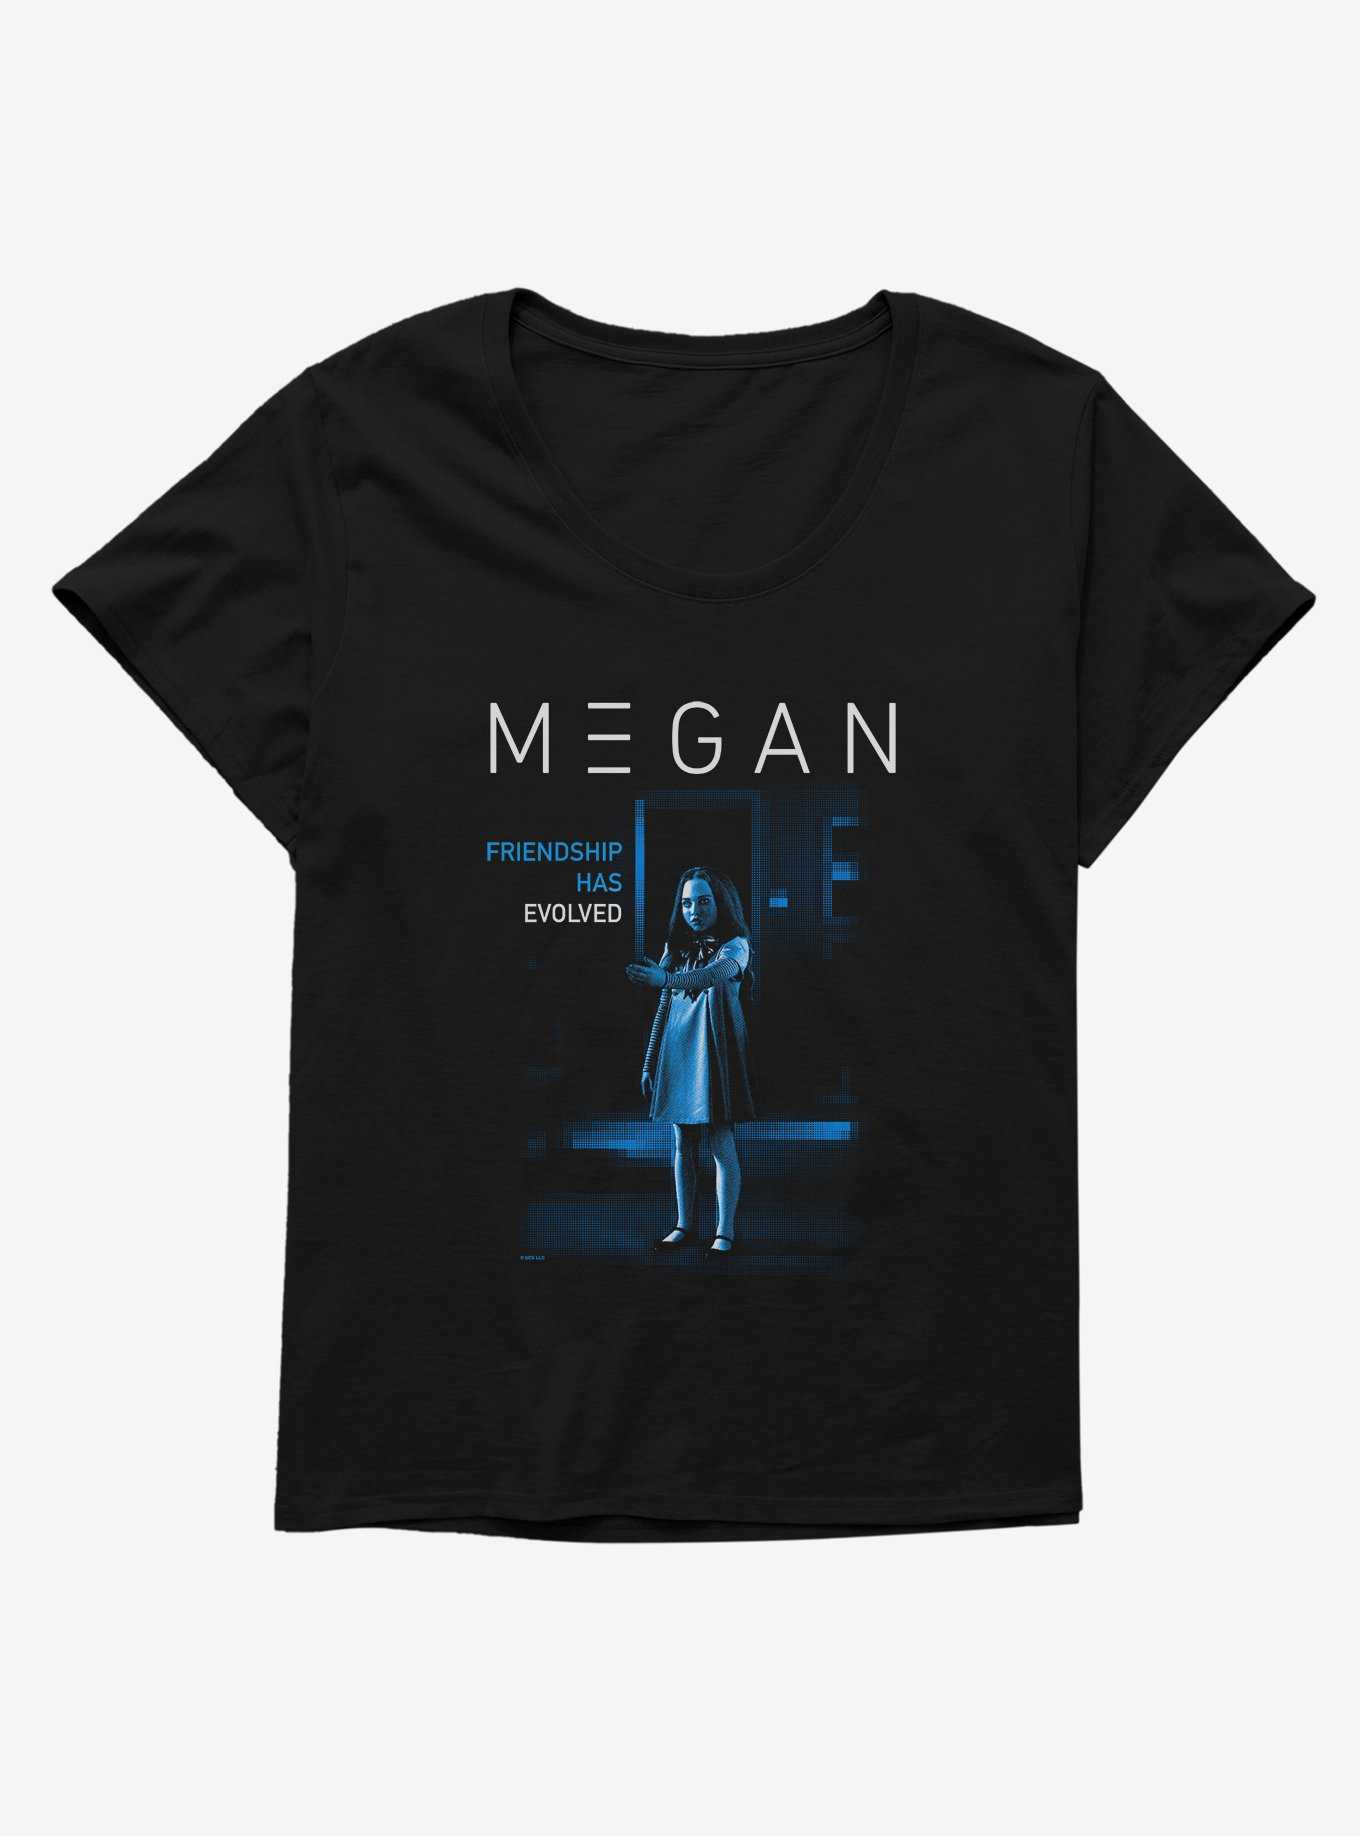 M3GAN Evolved Friendship Girls T-Shirt Plus Size, , hi-res